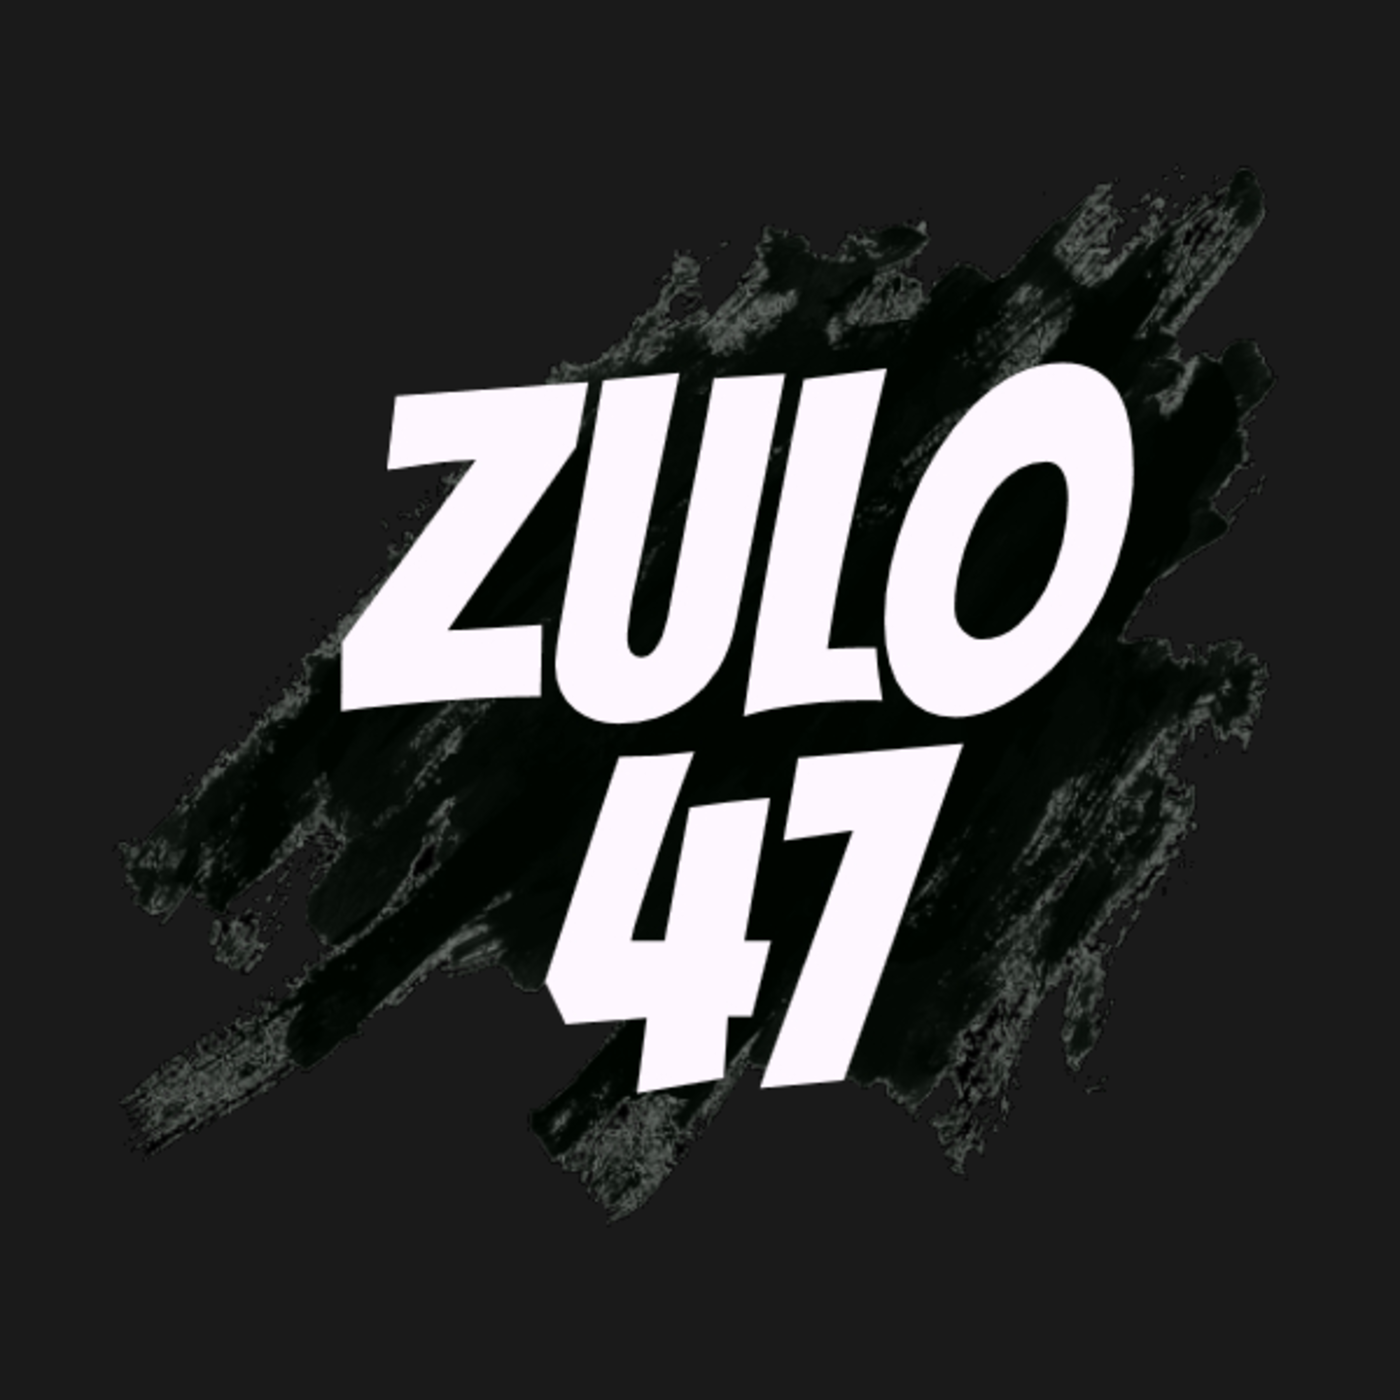 Zulo47 | musica en valencià